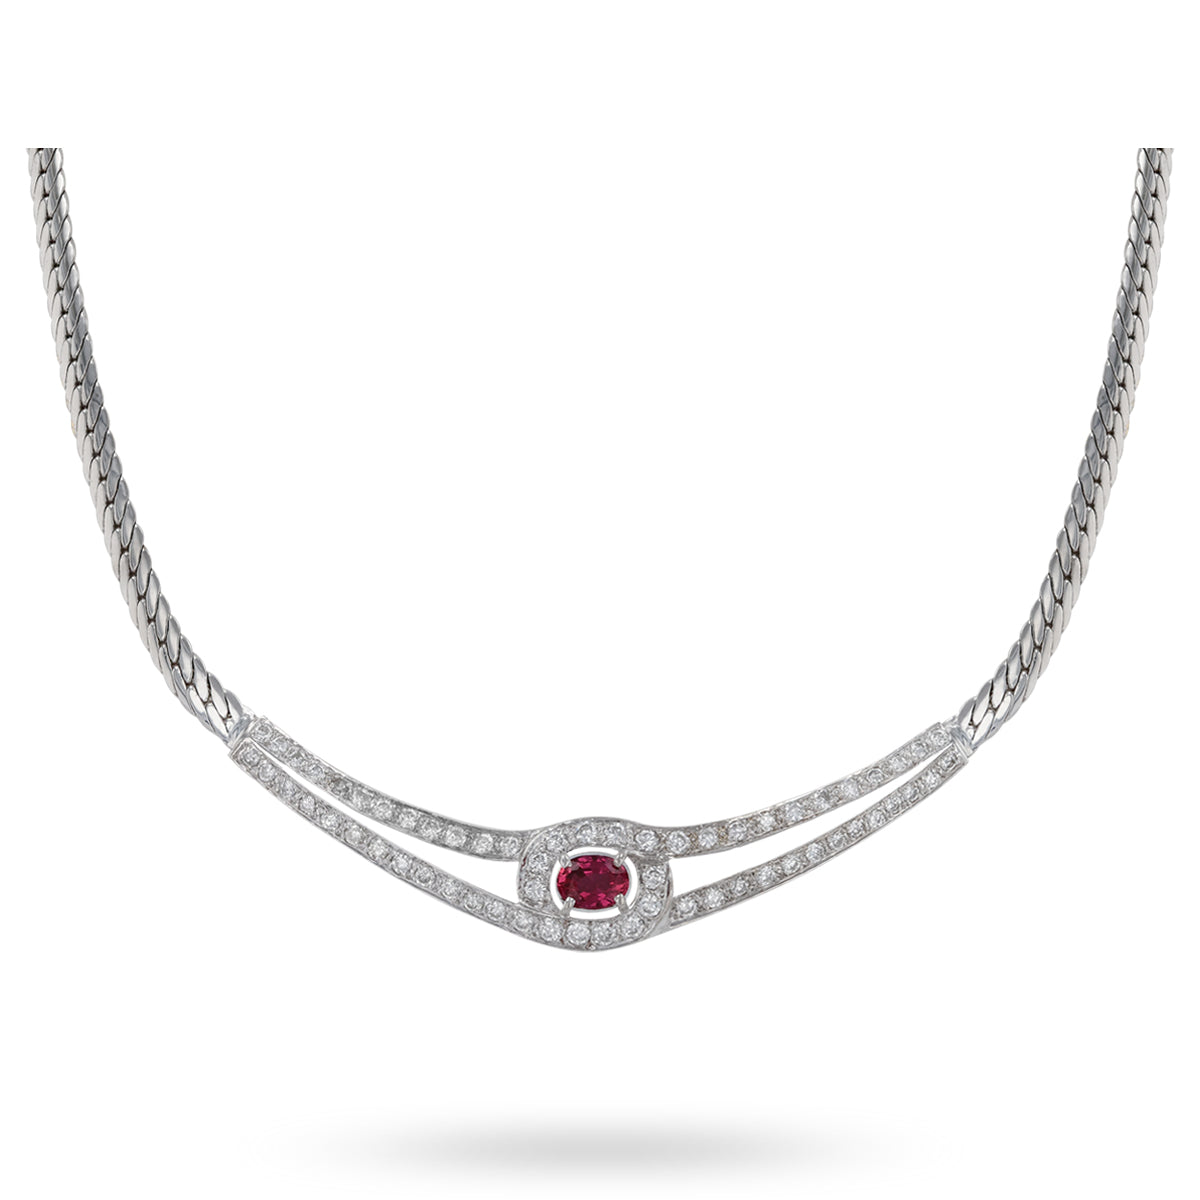 18ct White Gold Ruby & Diamond Set Herringbone Necklace.